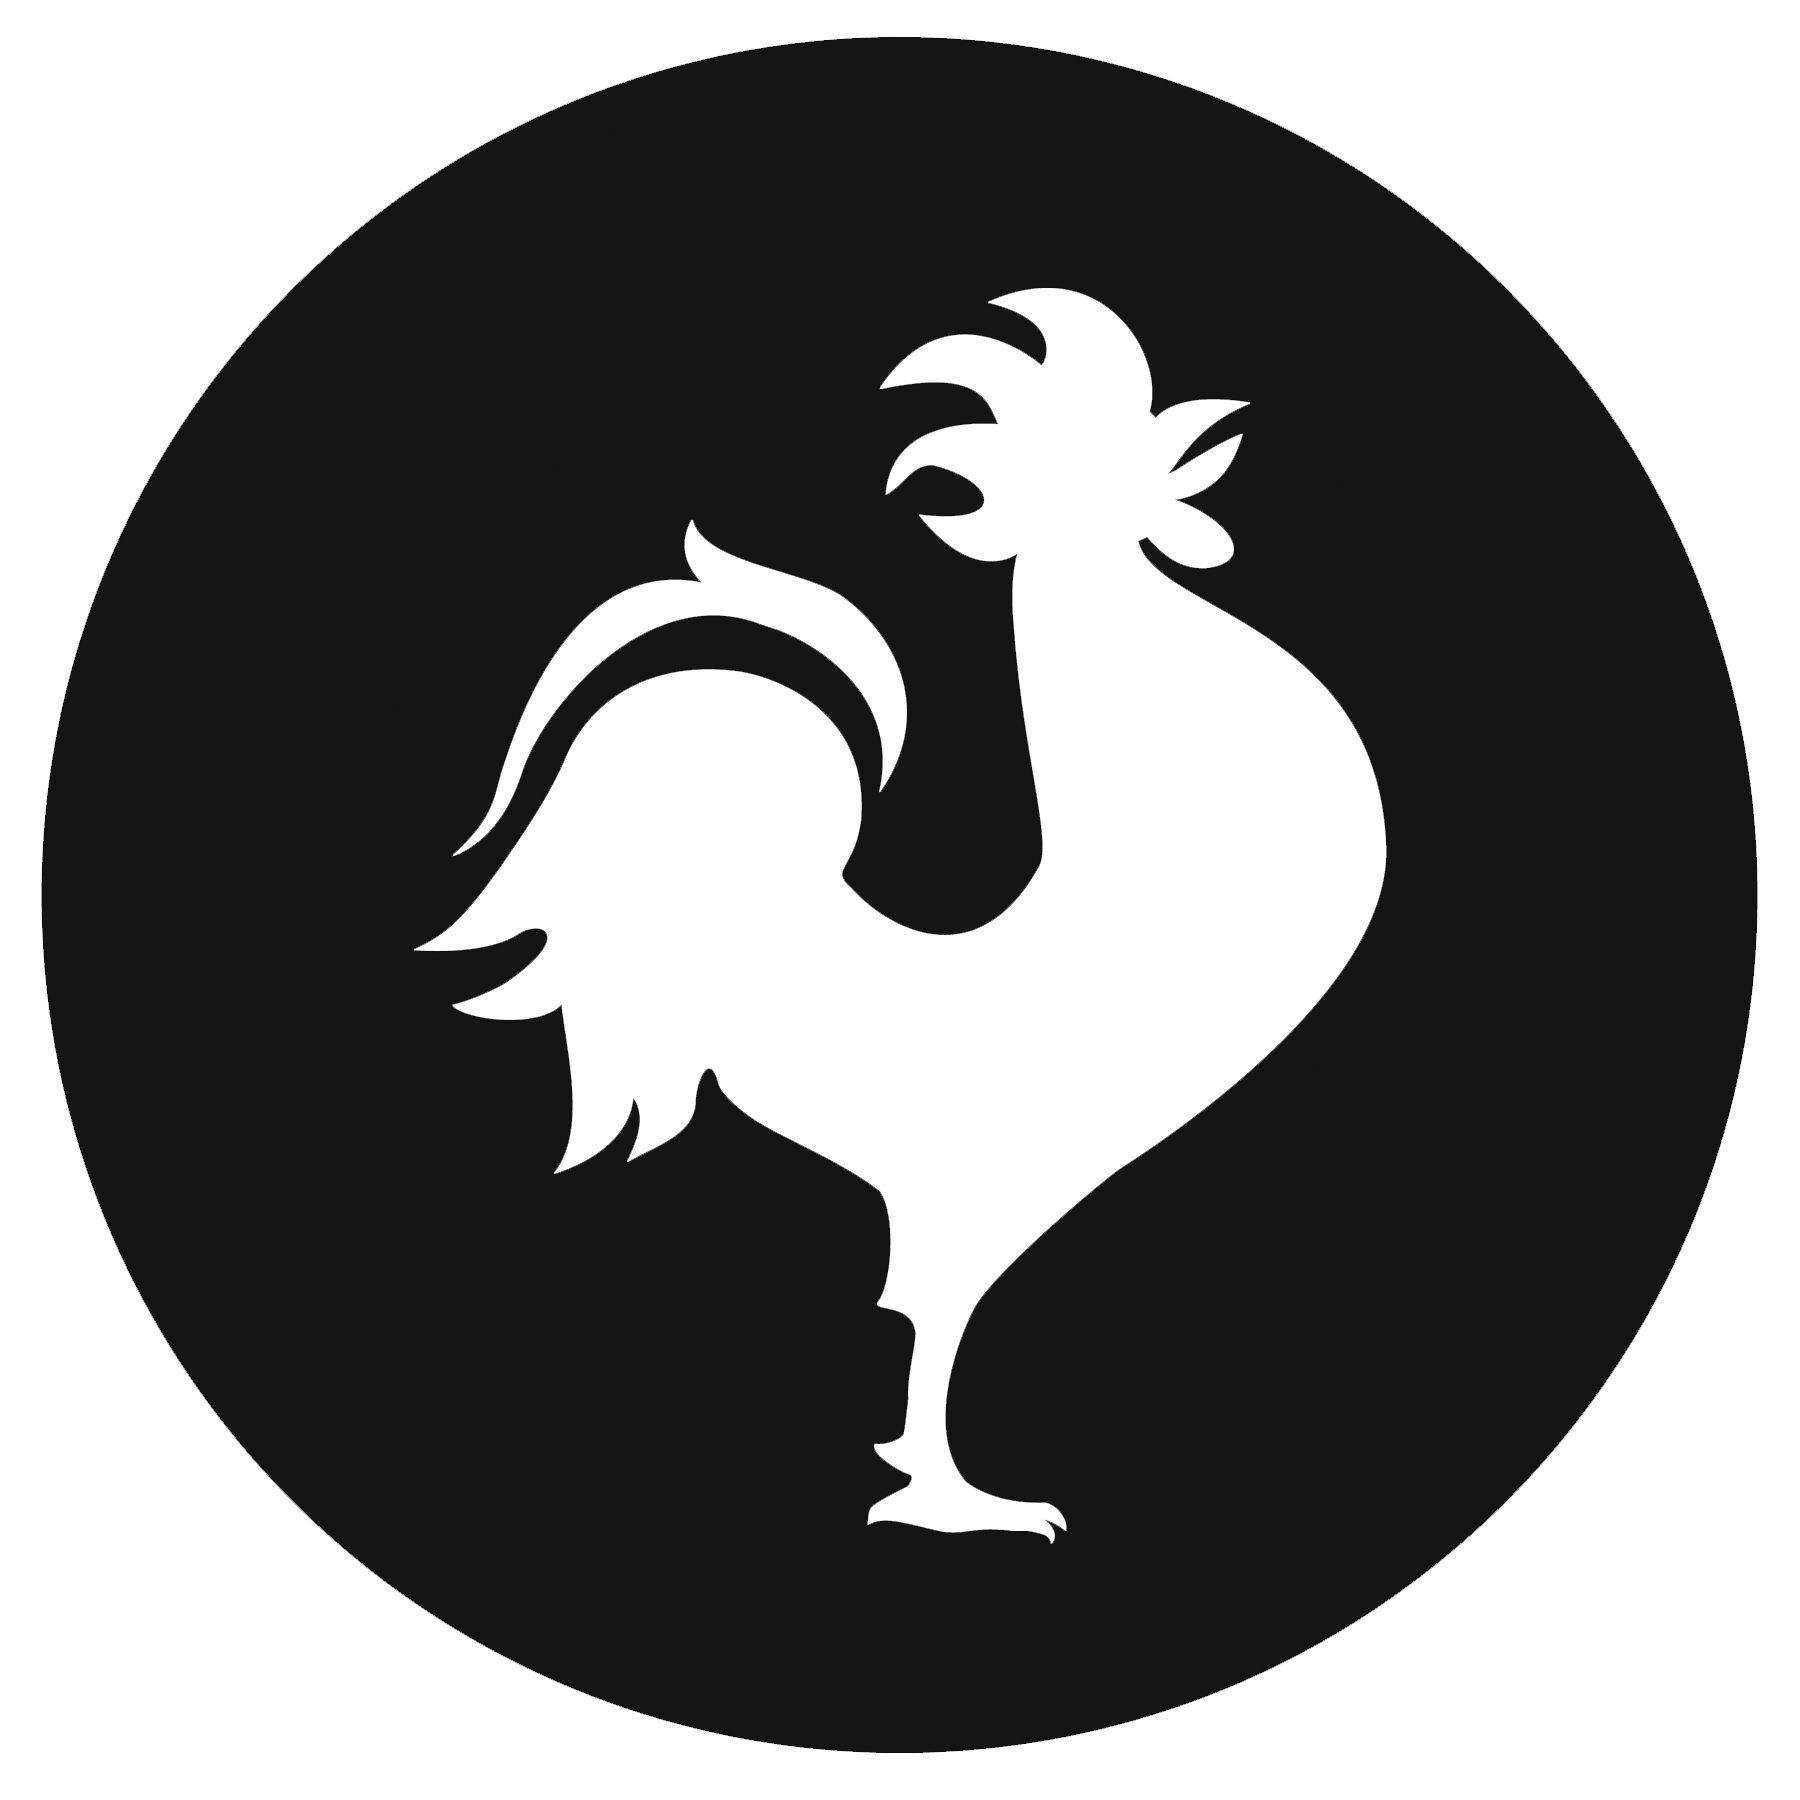 Black Rooster Logo - Image result for rooster logo | Pollería el rancho | Pinterest ...